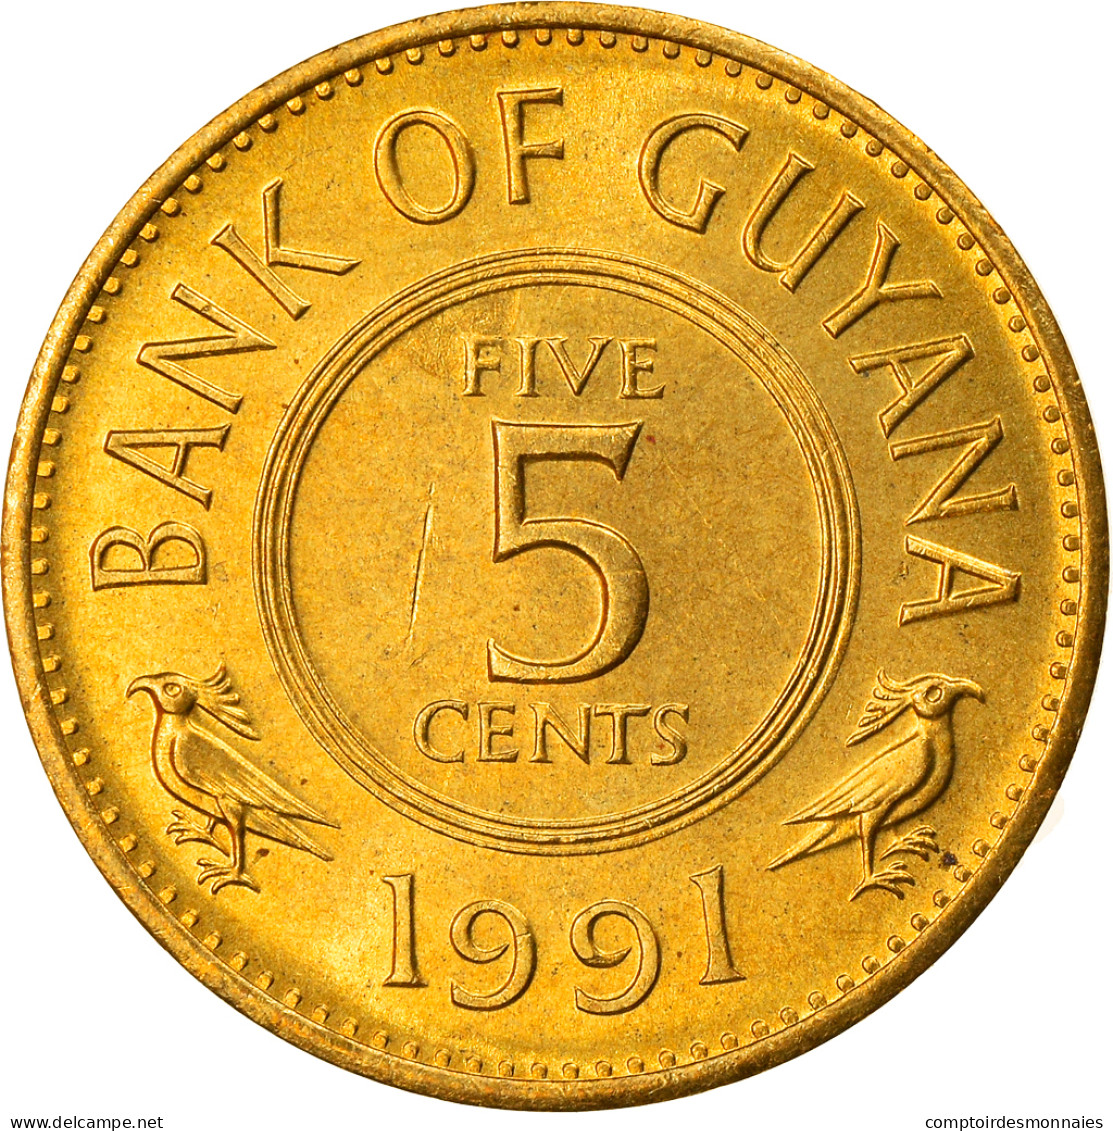 Monnaie, Guyana, 5 Cents, 1991, SPL, Nickel-brass, KM:32 - Guyana